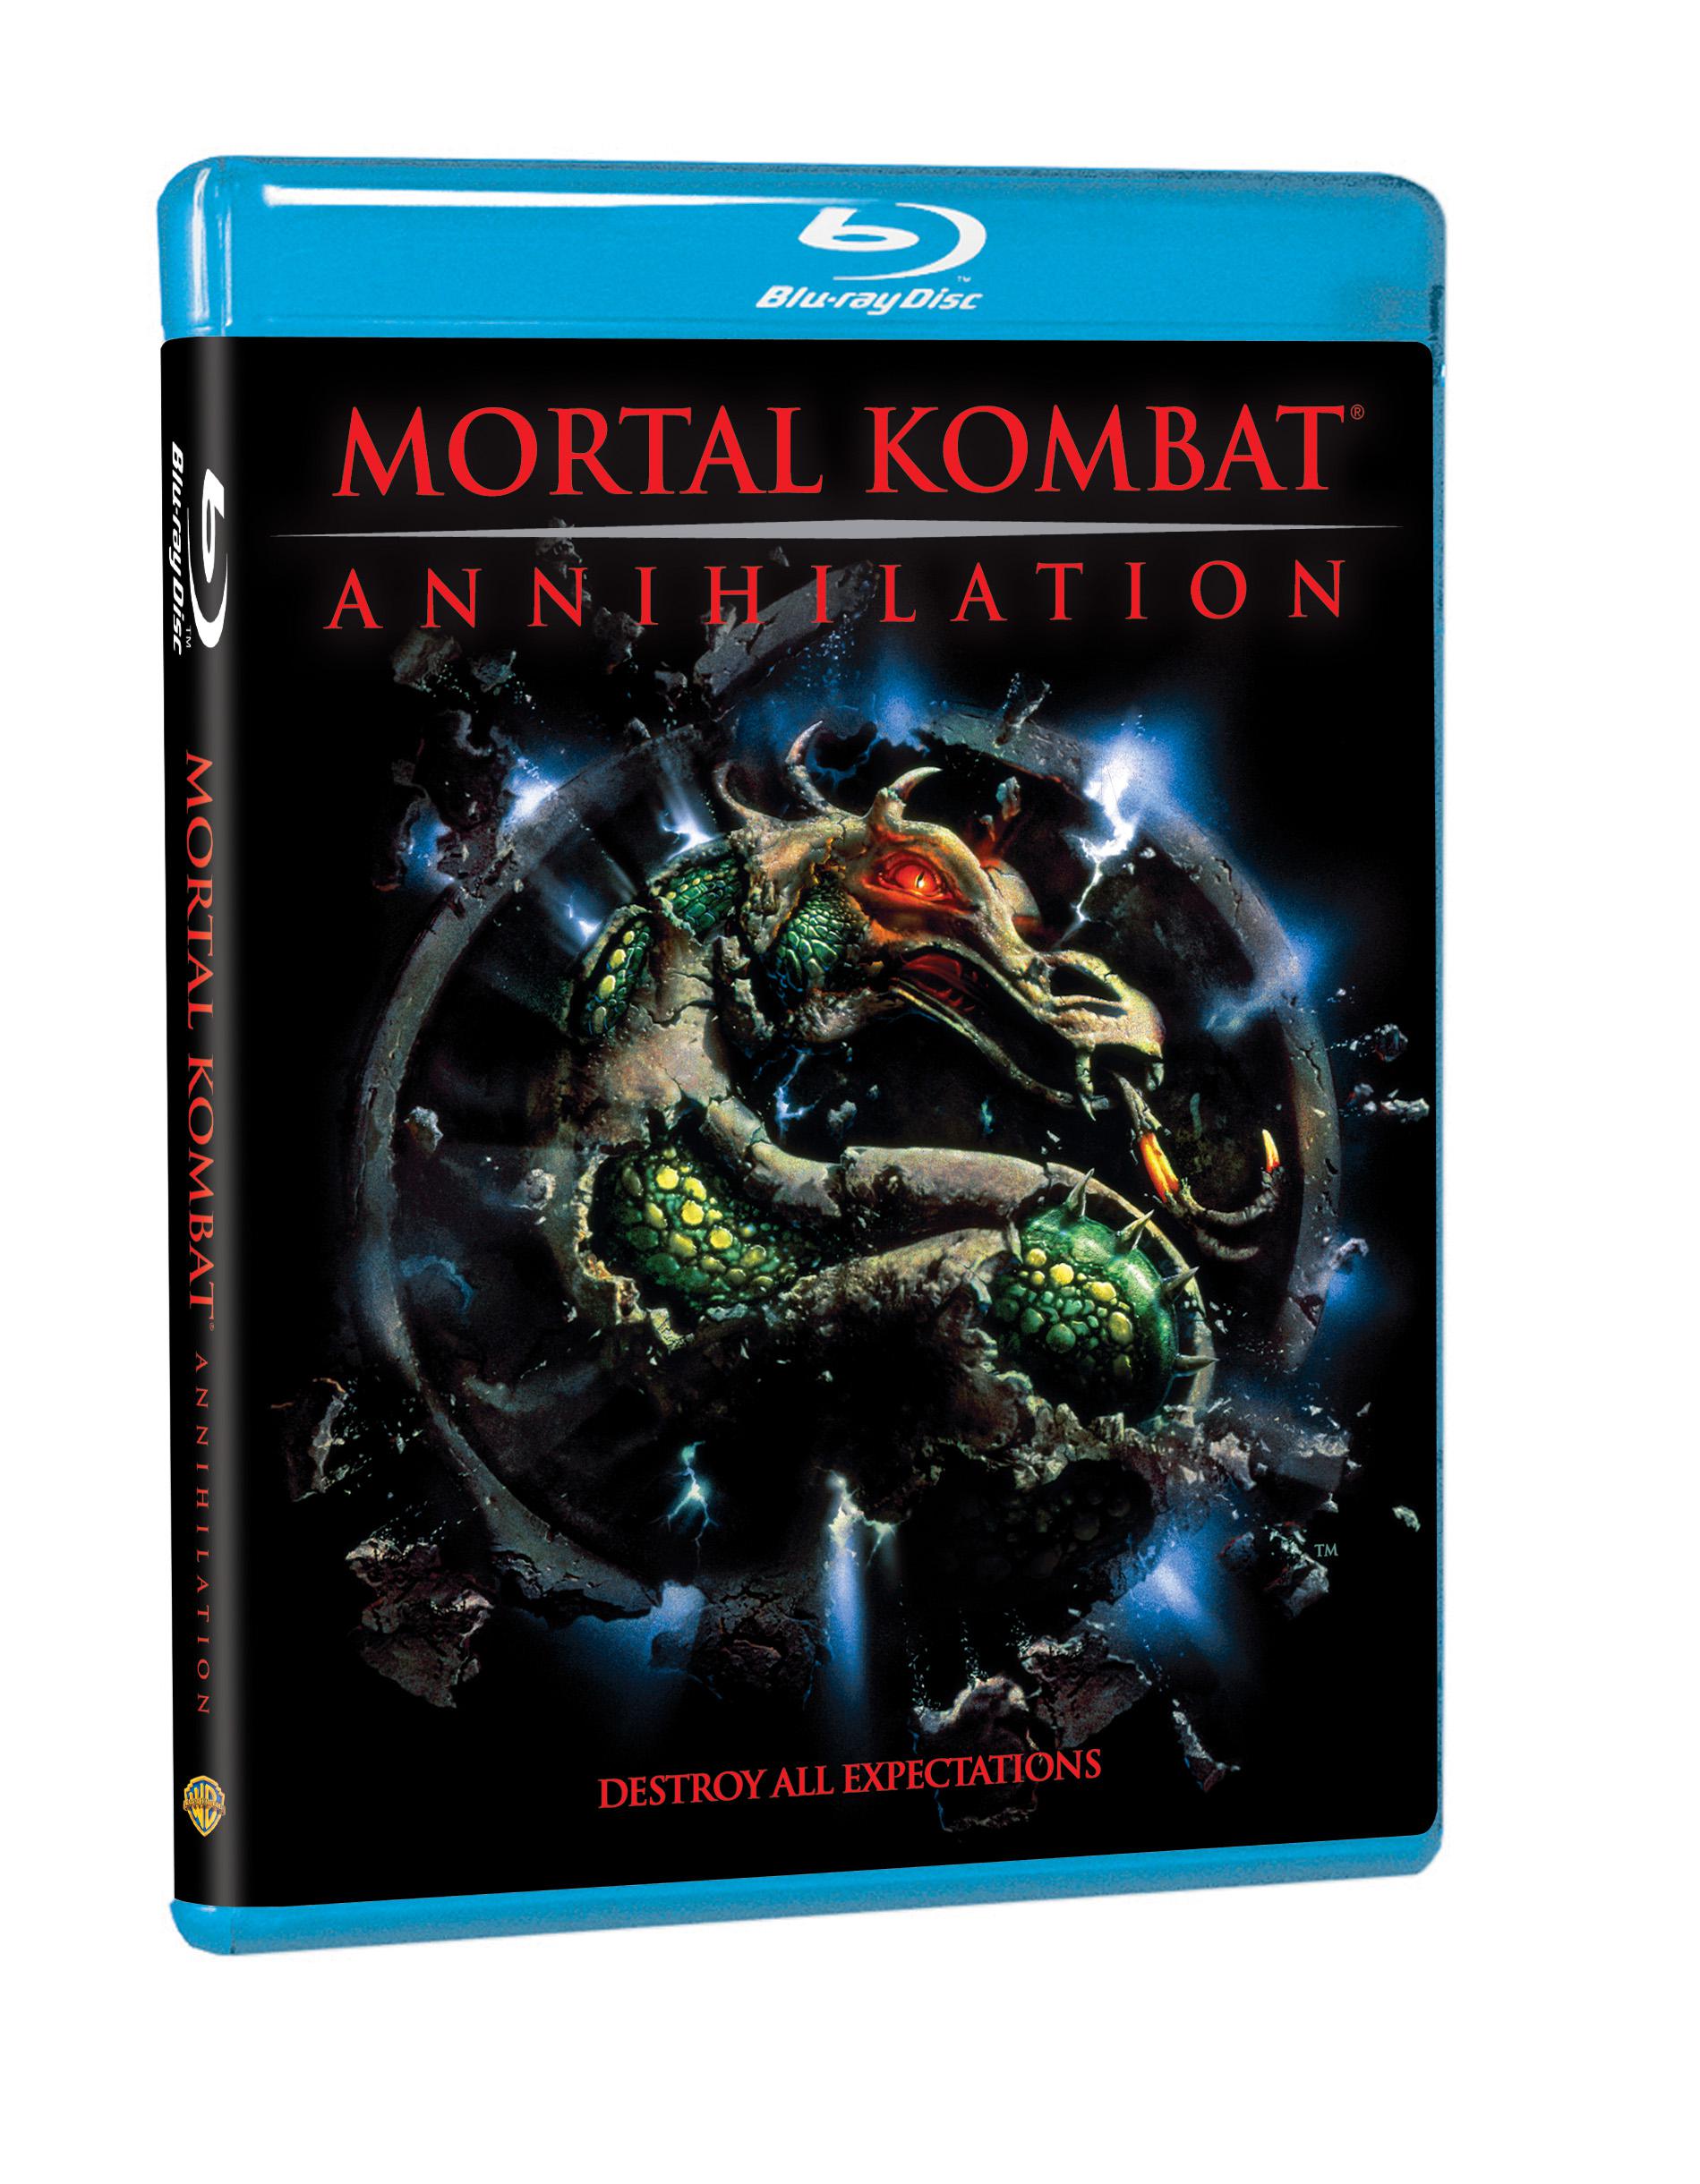 Sneak peek of Baraka in new Mortal Kombat 2 film confirms he'll already be  better than his horrible Annihilation counterpart